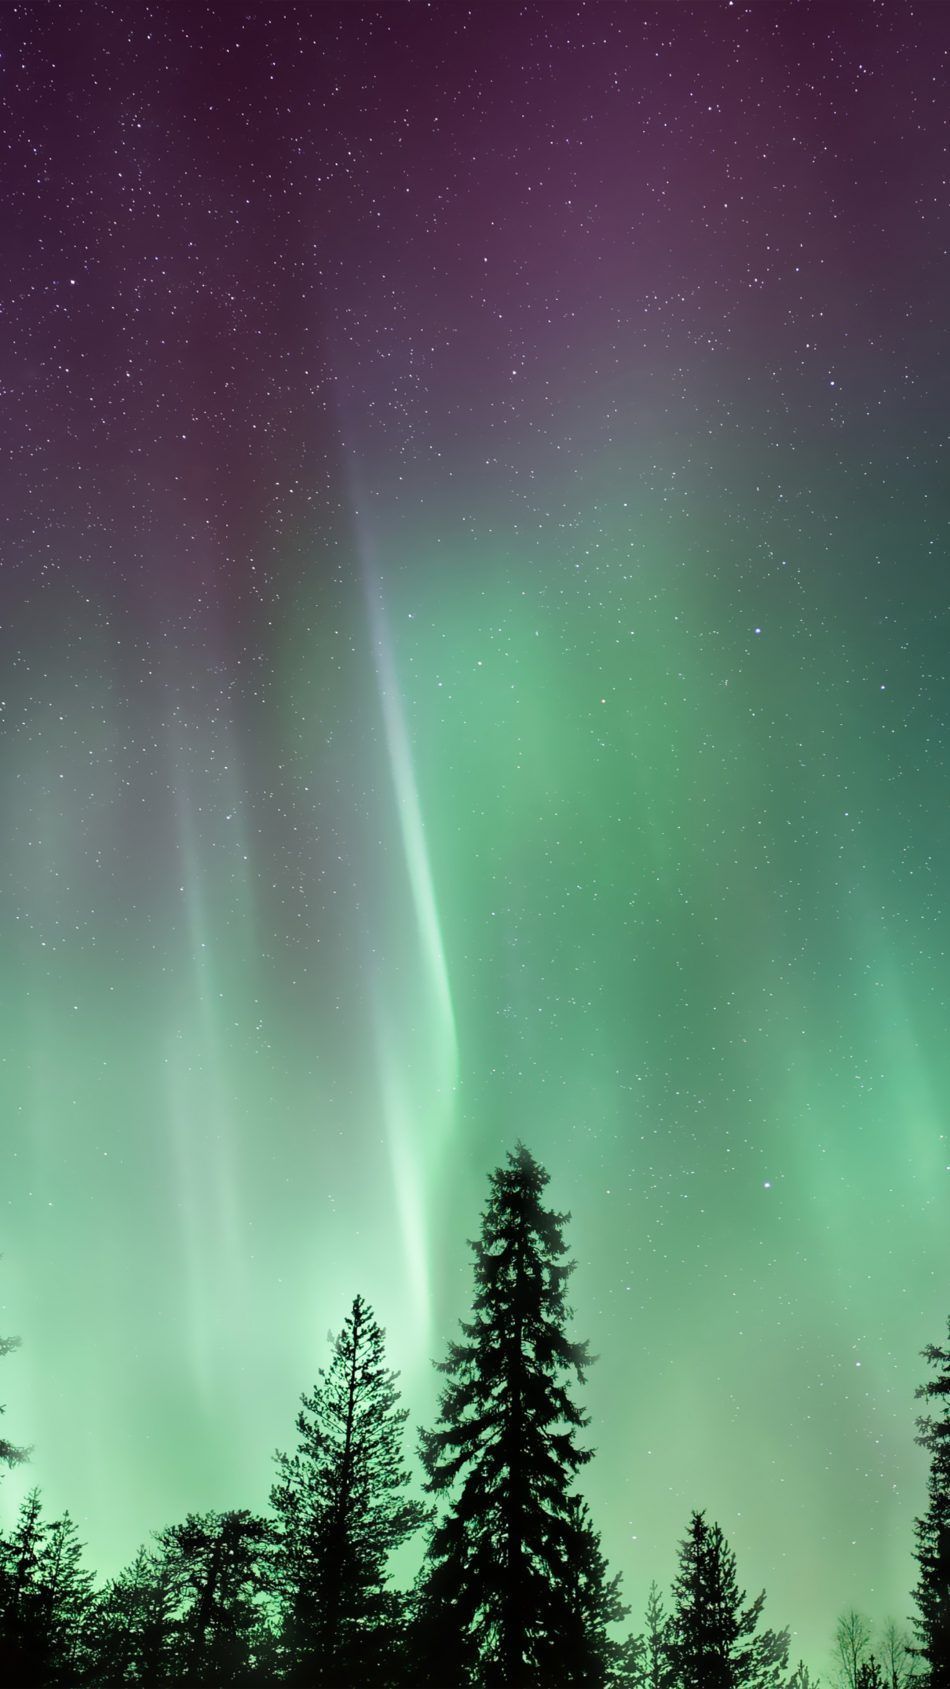 Amazing Northern Lights Aurora Borealis 4K Ultra HD Mobile Wallpaper. Northern lights (aurora borealis), Northern lights, Aurora borealis